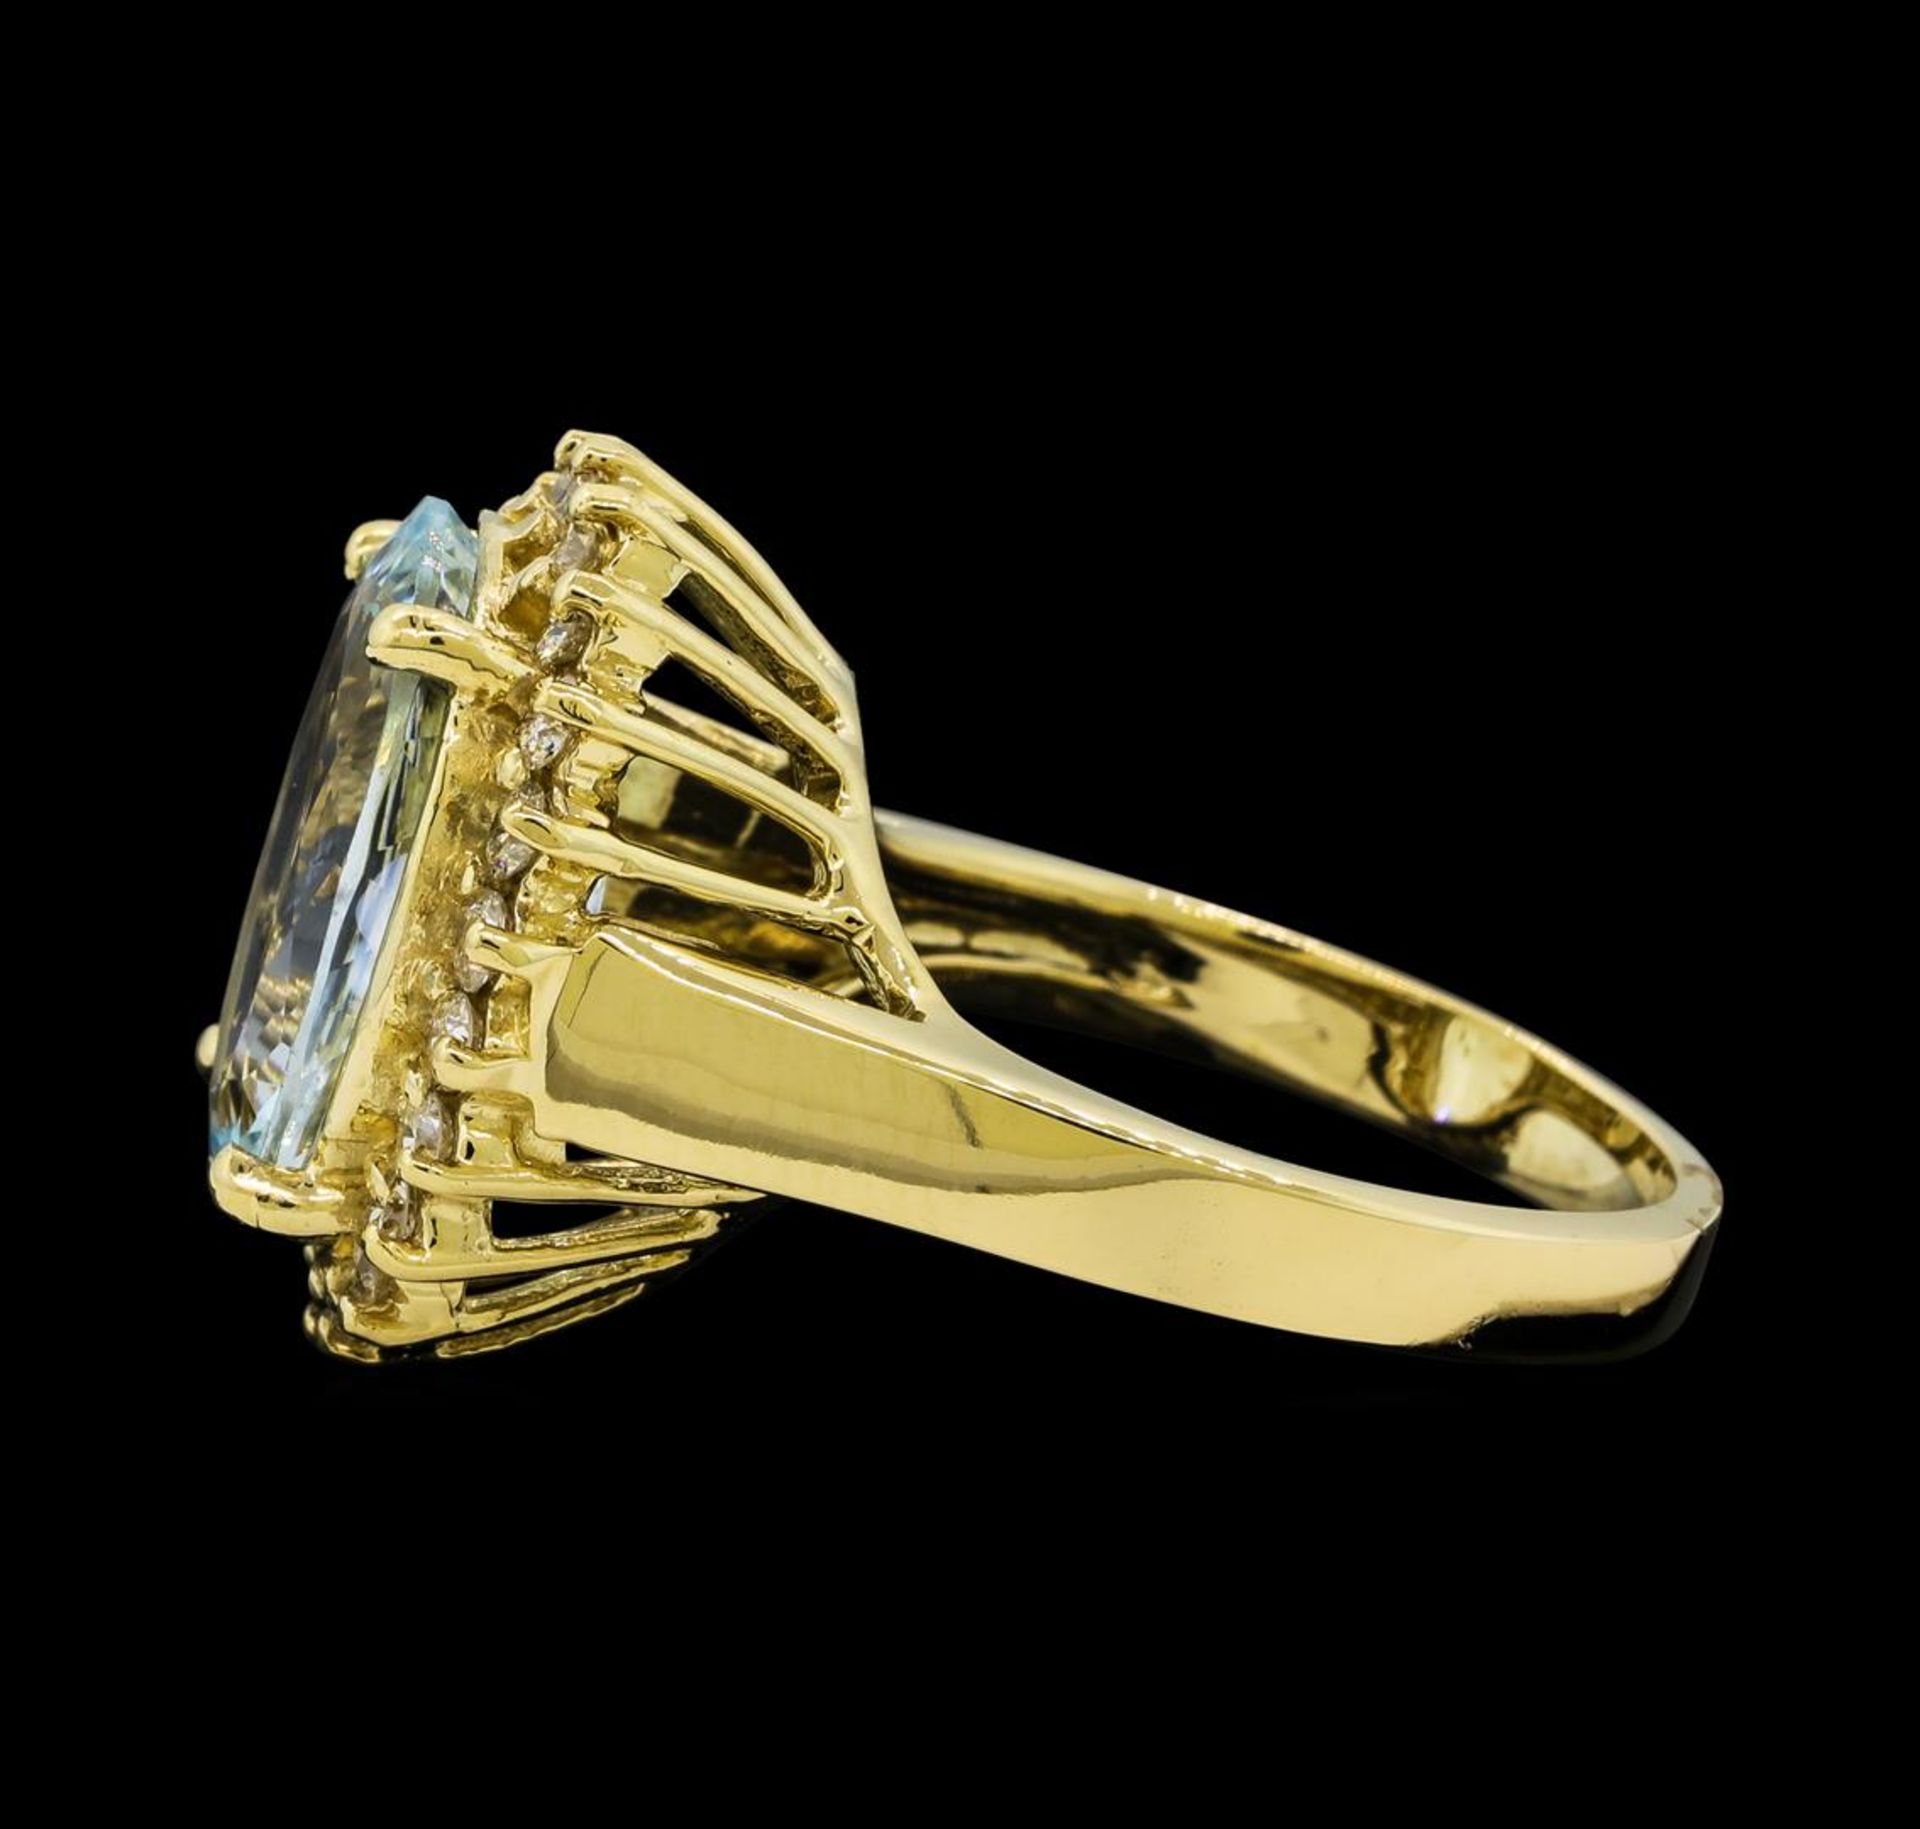 4.45 ctw Aquamarine and Diamond Ring - 14KT Yellow Gold - Image 3 of 4